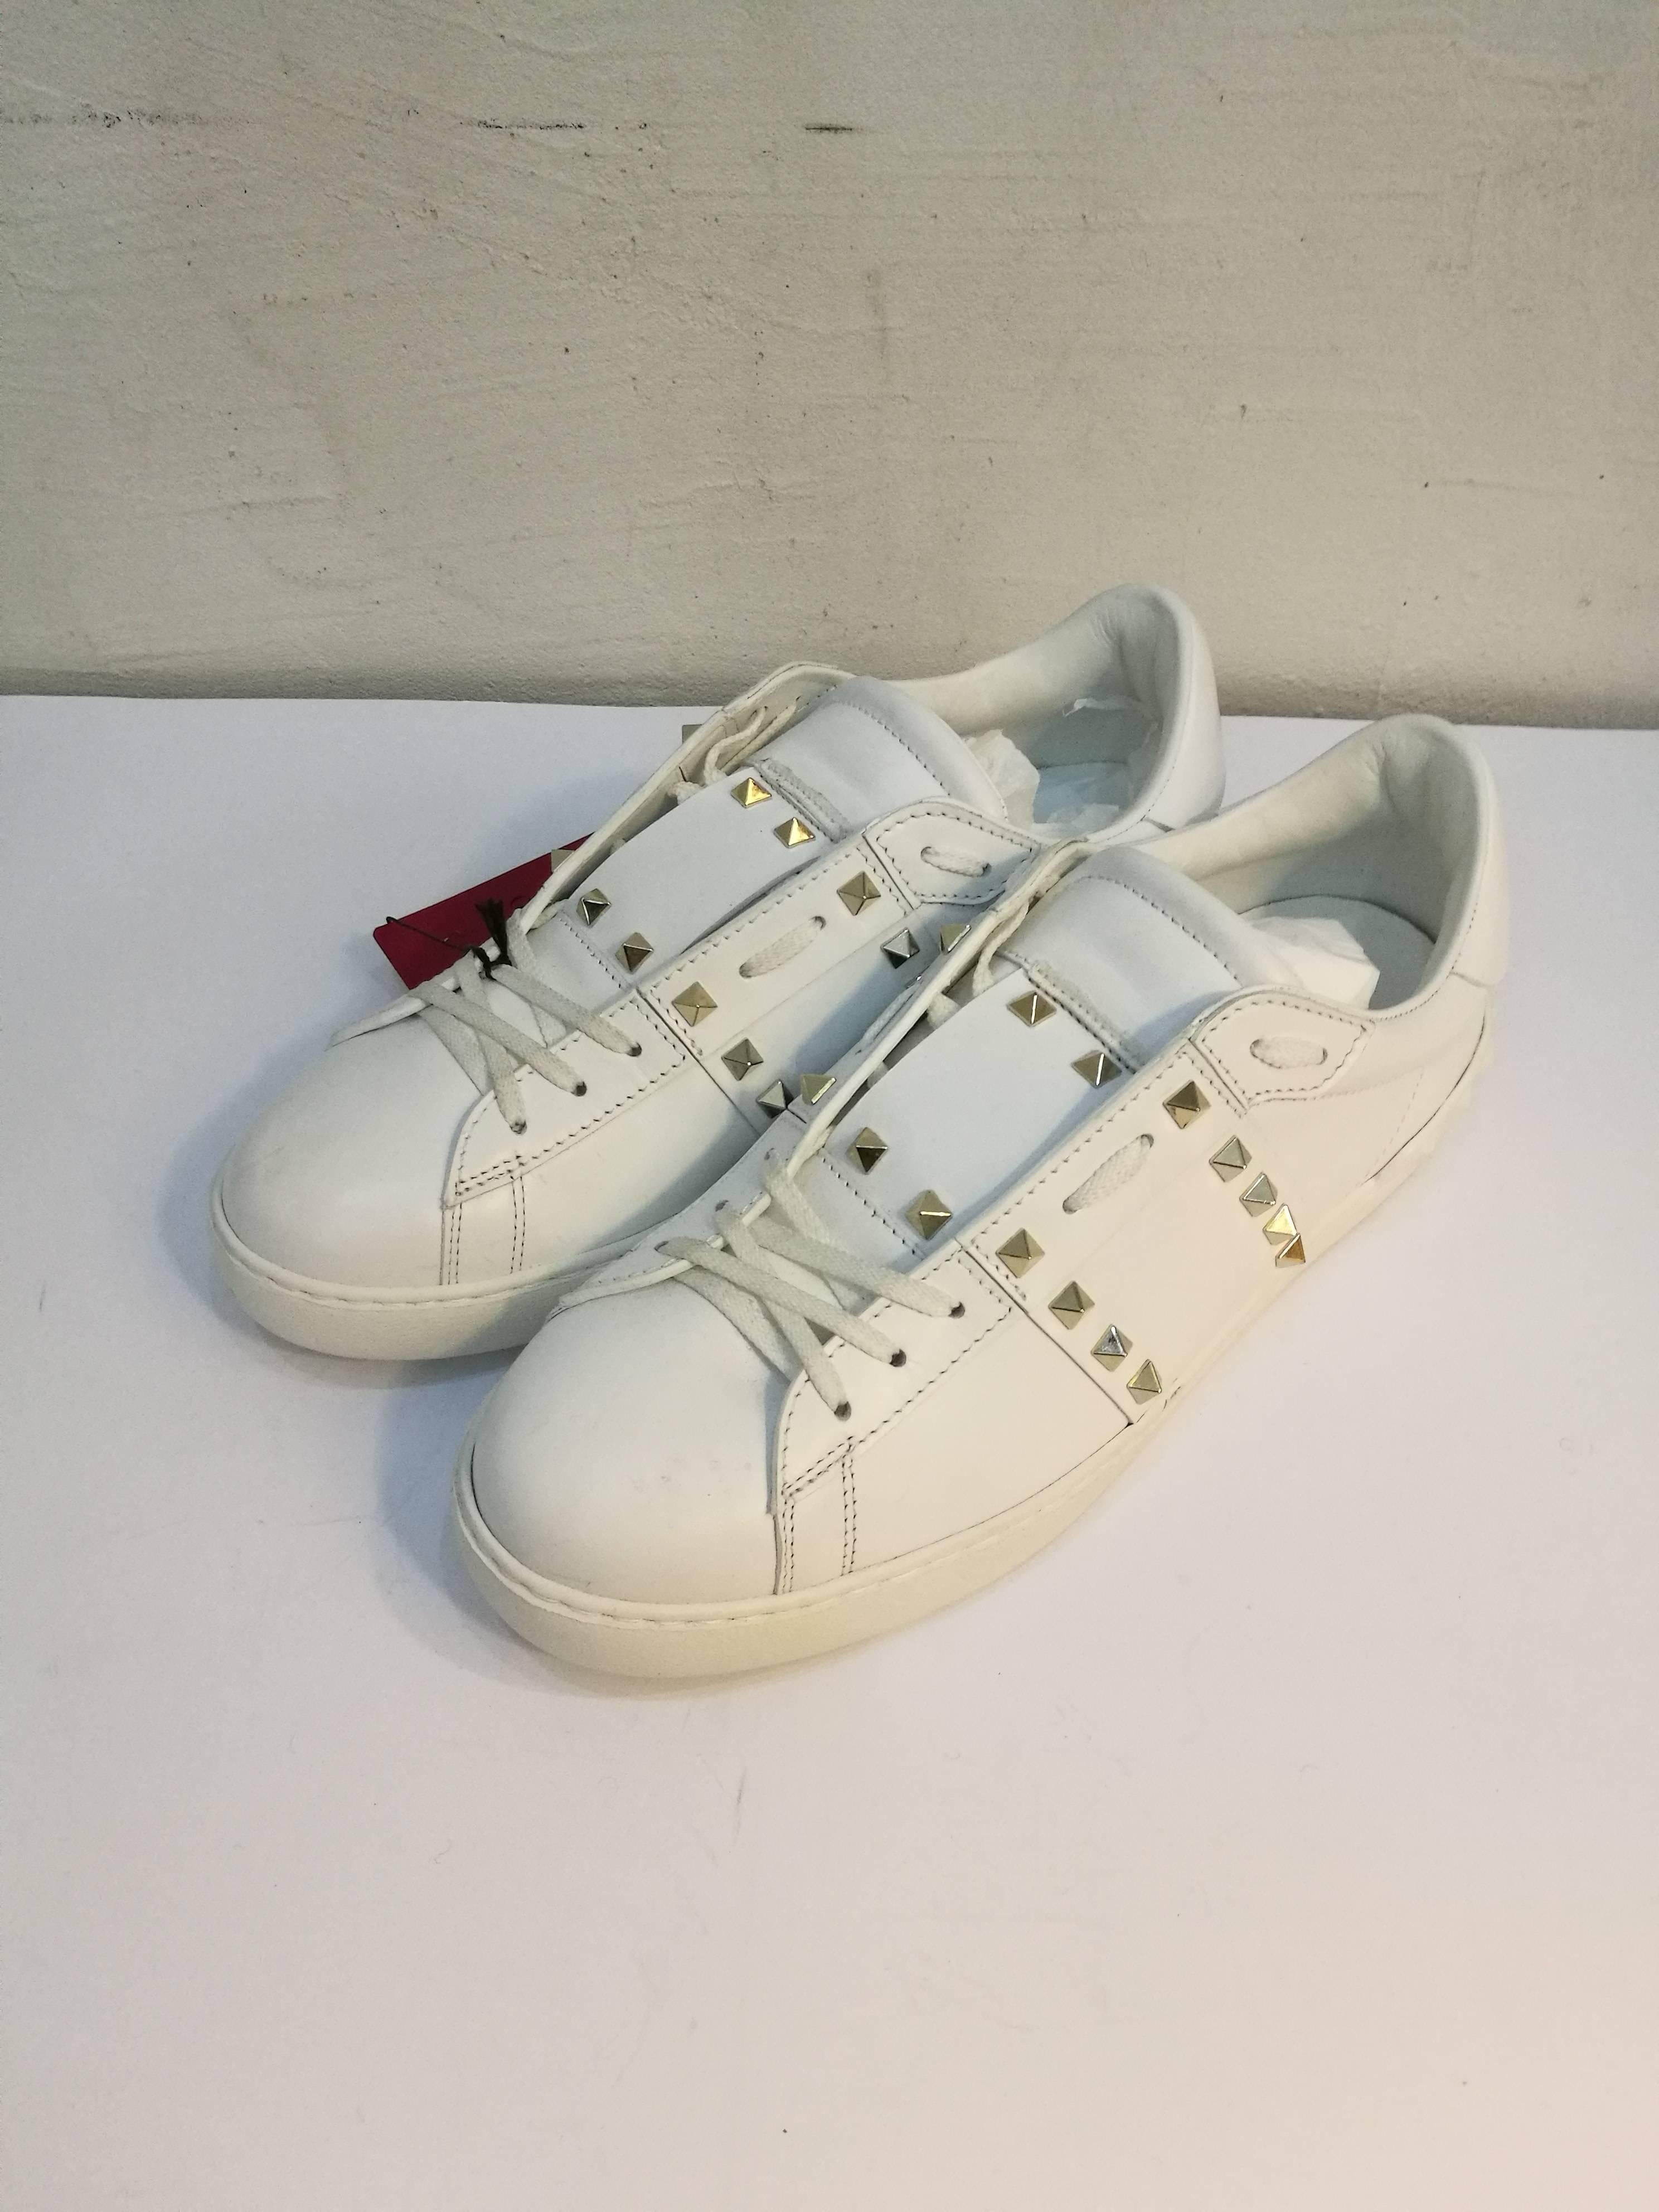 Valentino Garavani White Rockstuds Sneakers
Still with box
Size: 43 in italian size range
Still with Tags
Unworn